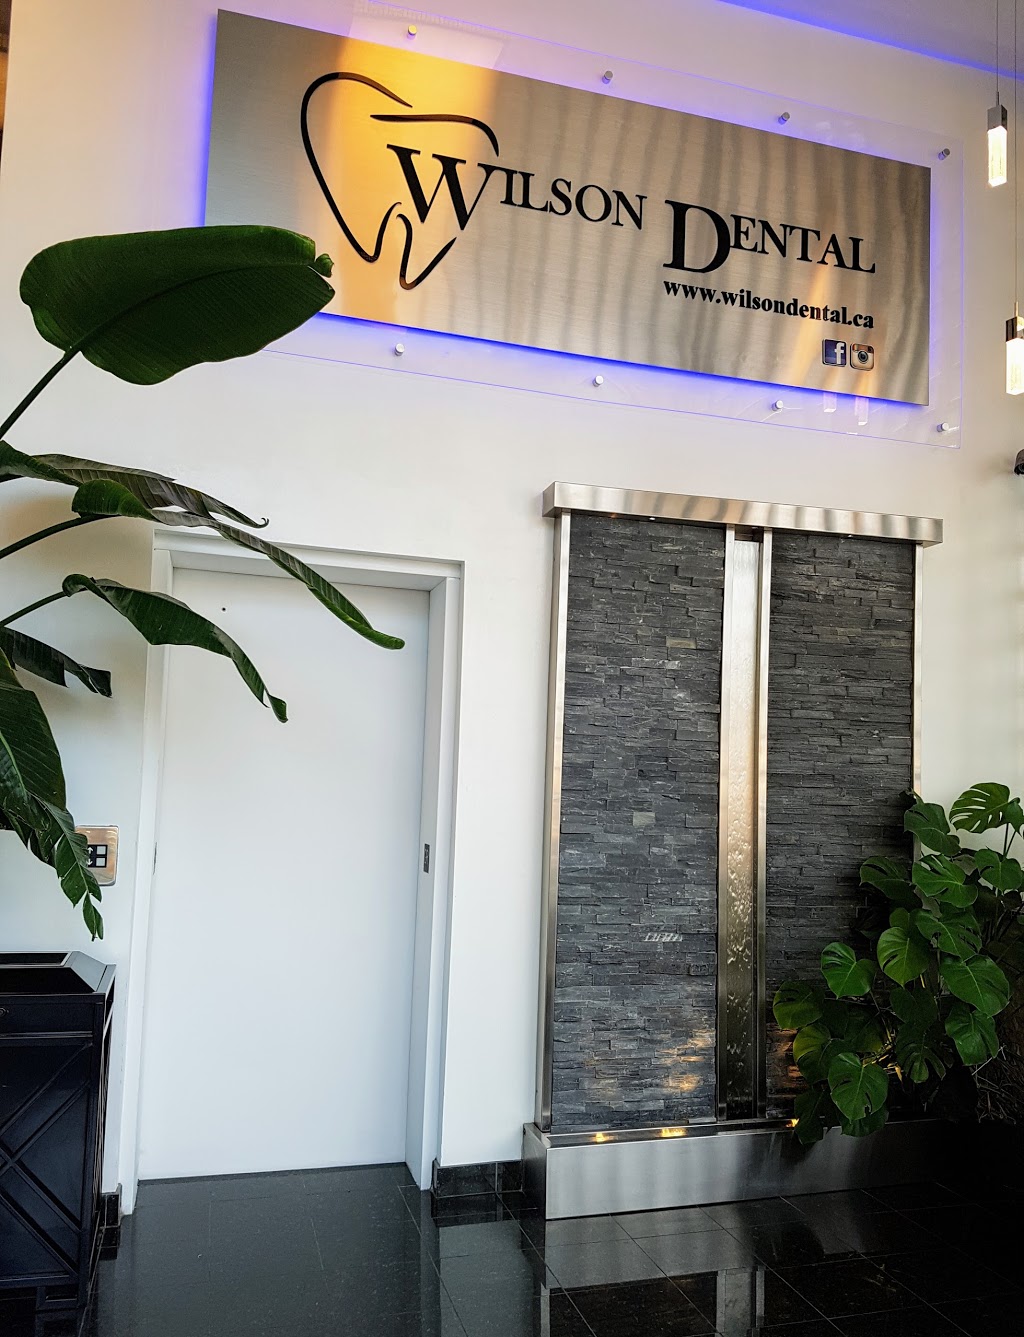 Wilson Dental Centre | dentist | 968 Wilson Ave, North York, ON M3K 1E7, Canada | 4165312304 OR +1 416-531-2304